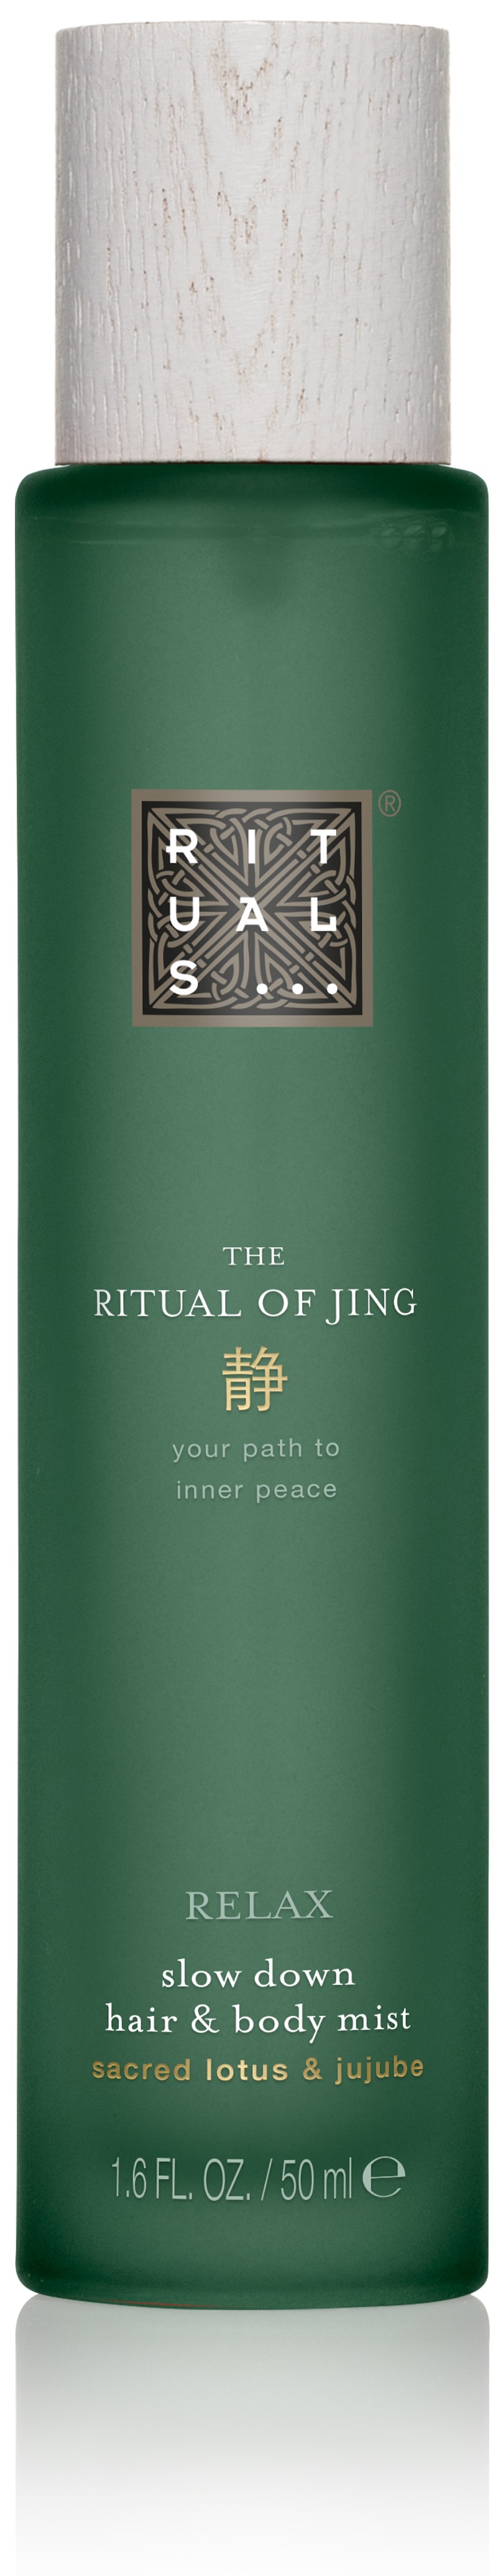 Rituals The Ritual of Jing Hair, Body & Bed Mist 50 ml